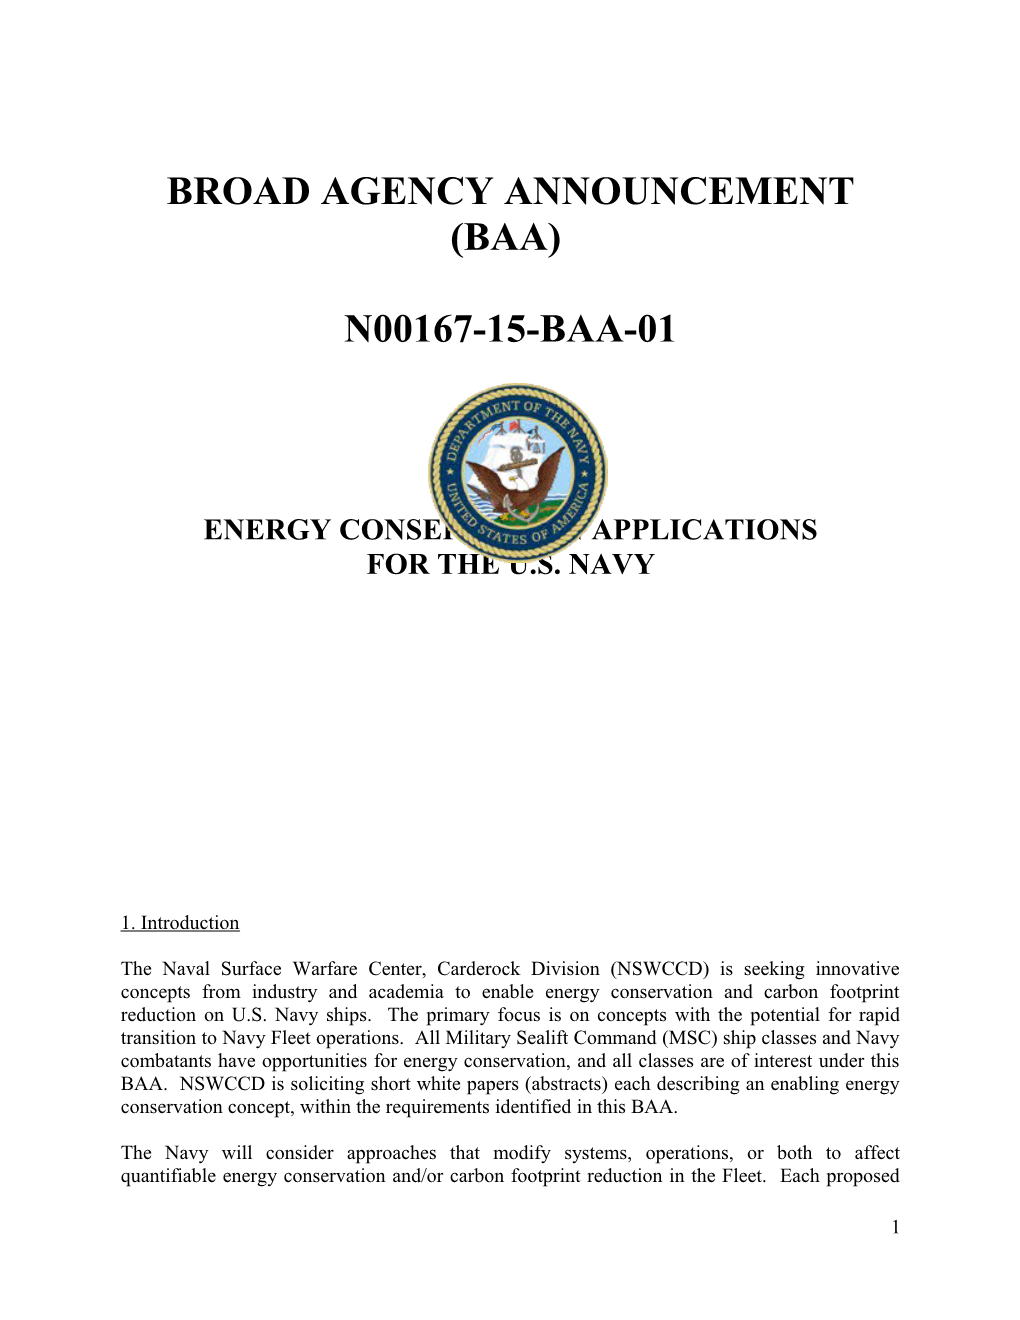 Broad Agency Announcement (Baa)